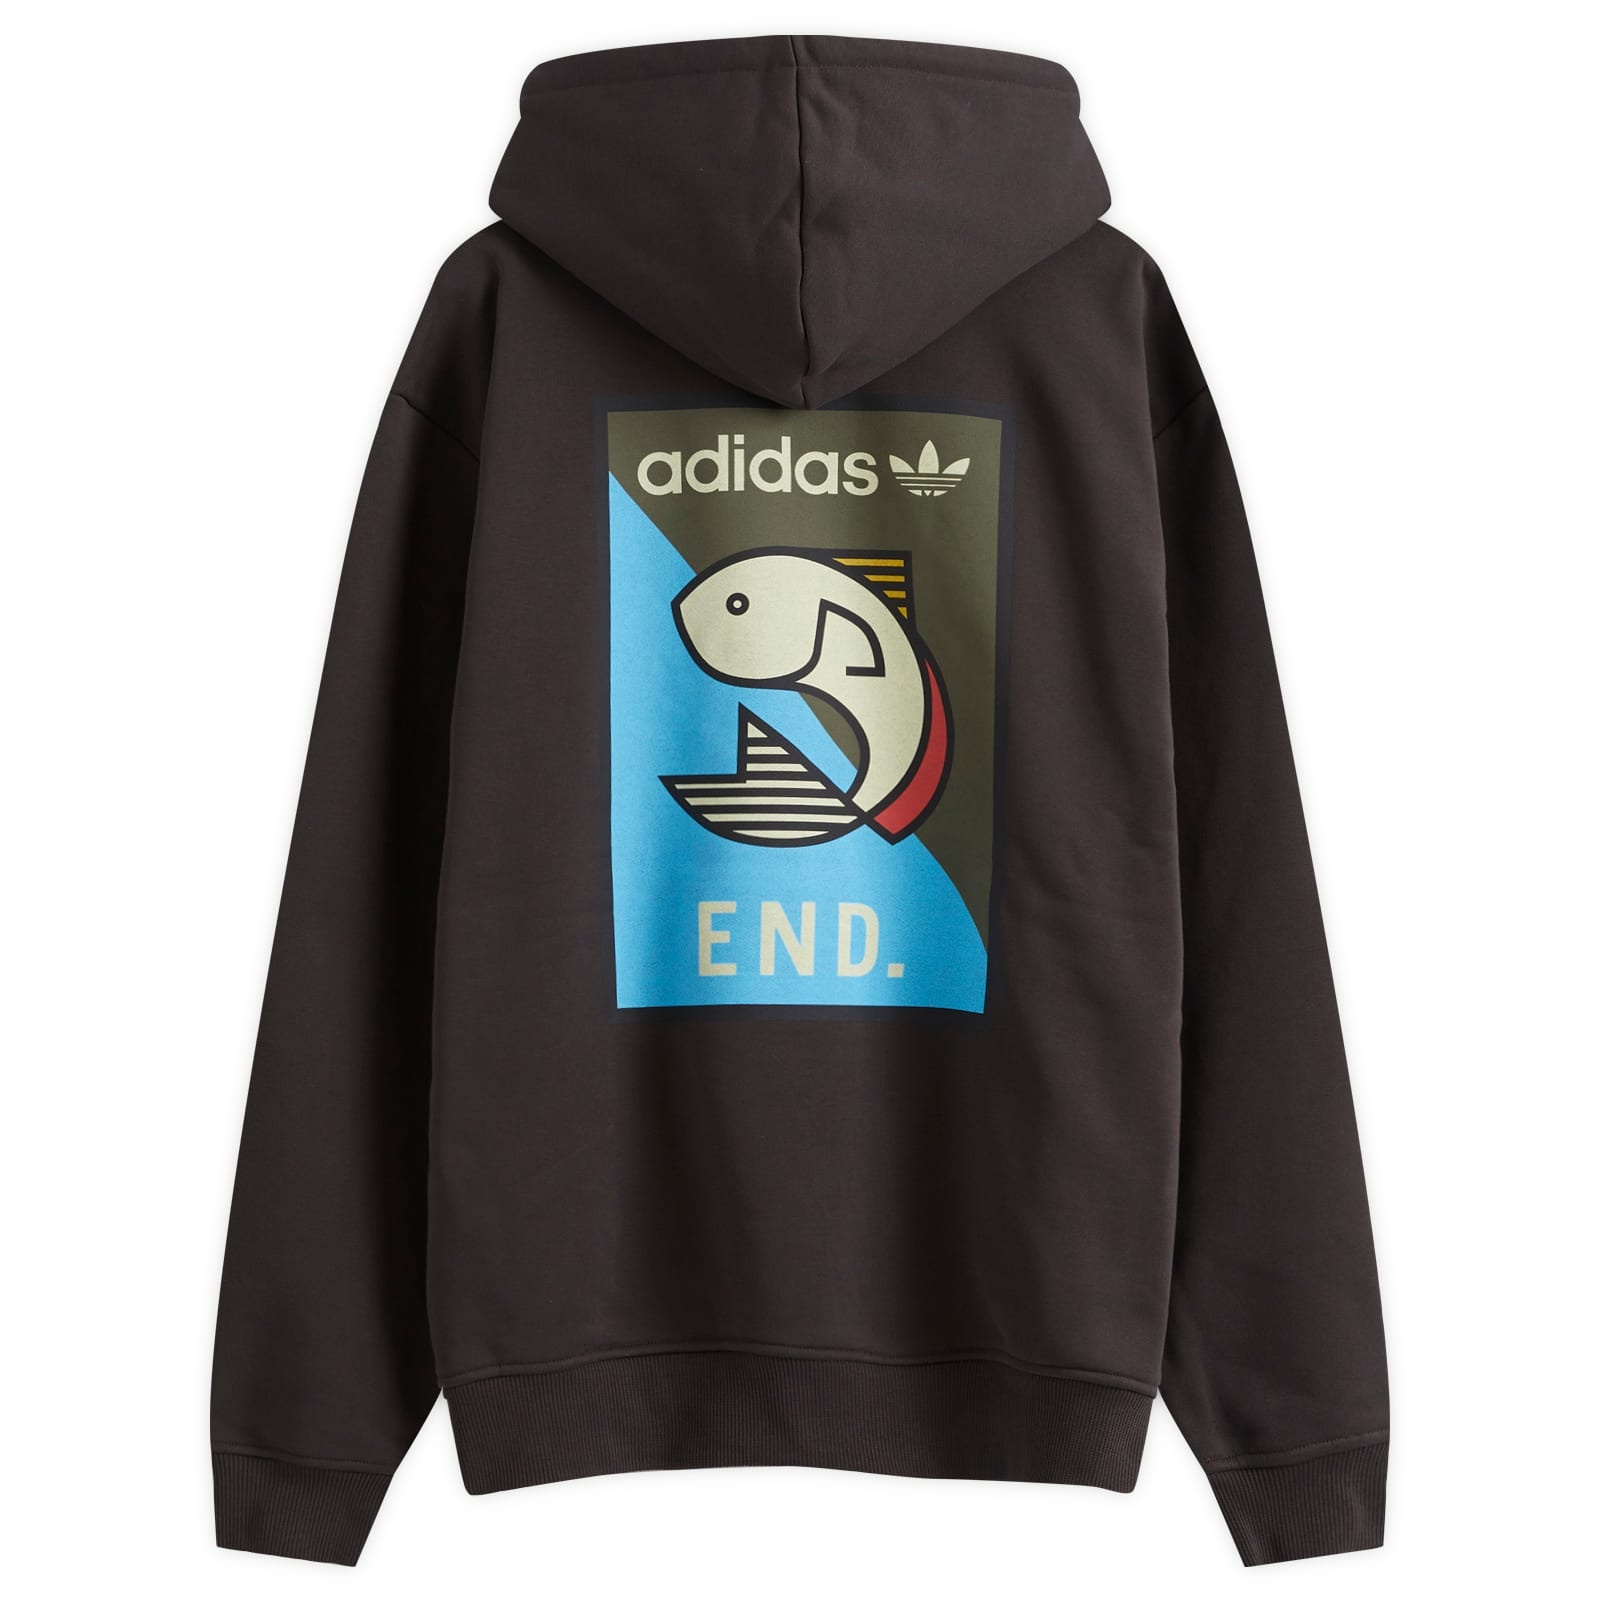 END. X Adidas Flyfishing Hoodie - 2